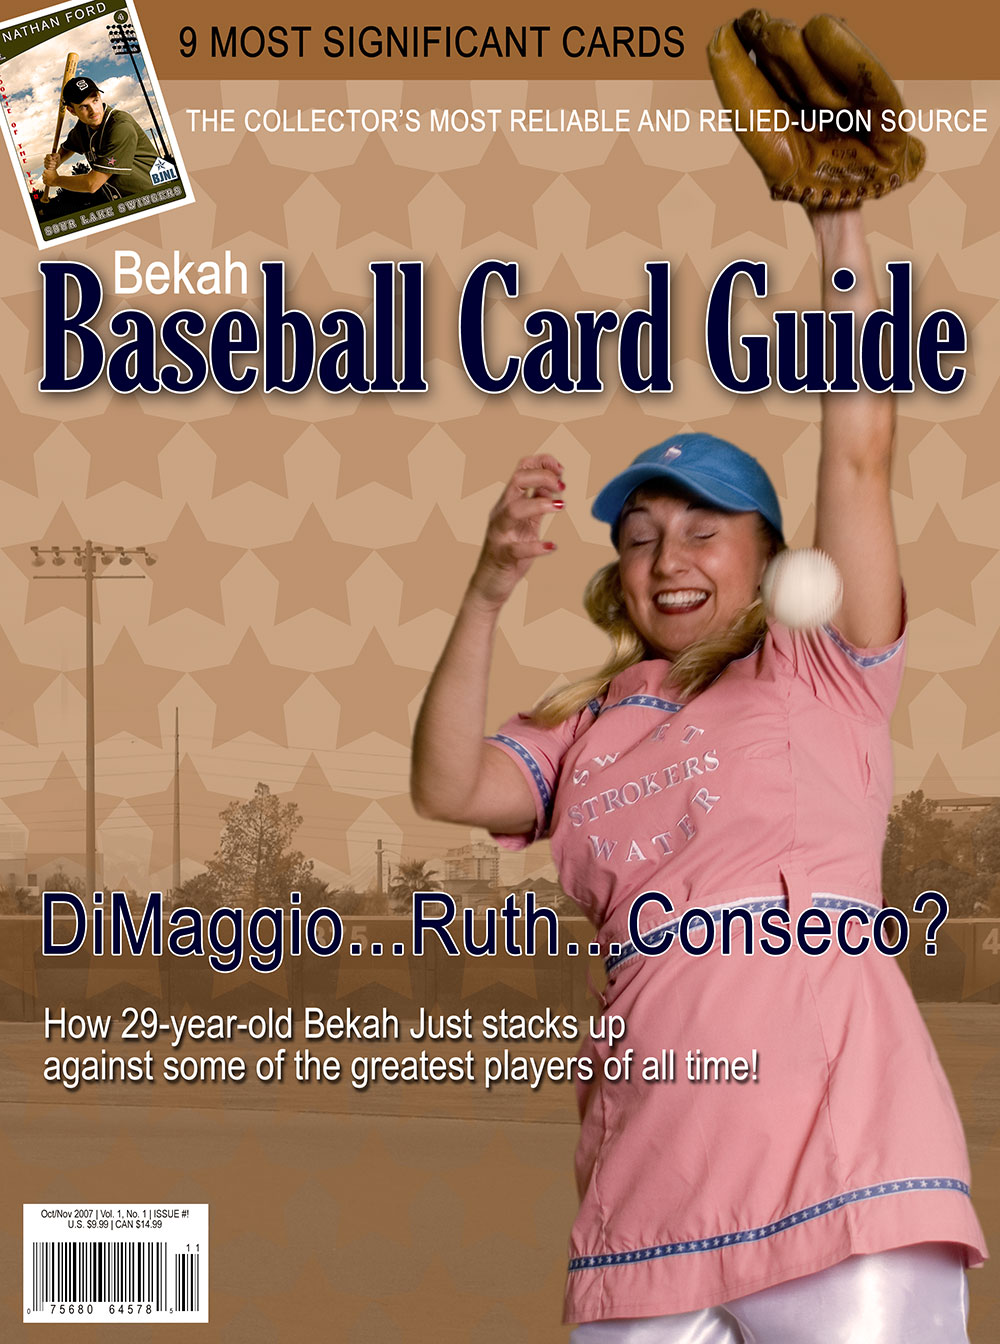 Beckett Baseball Card magazine cover